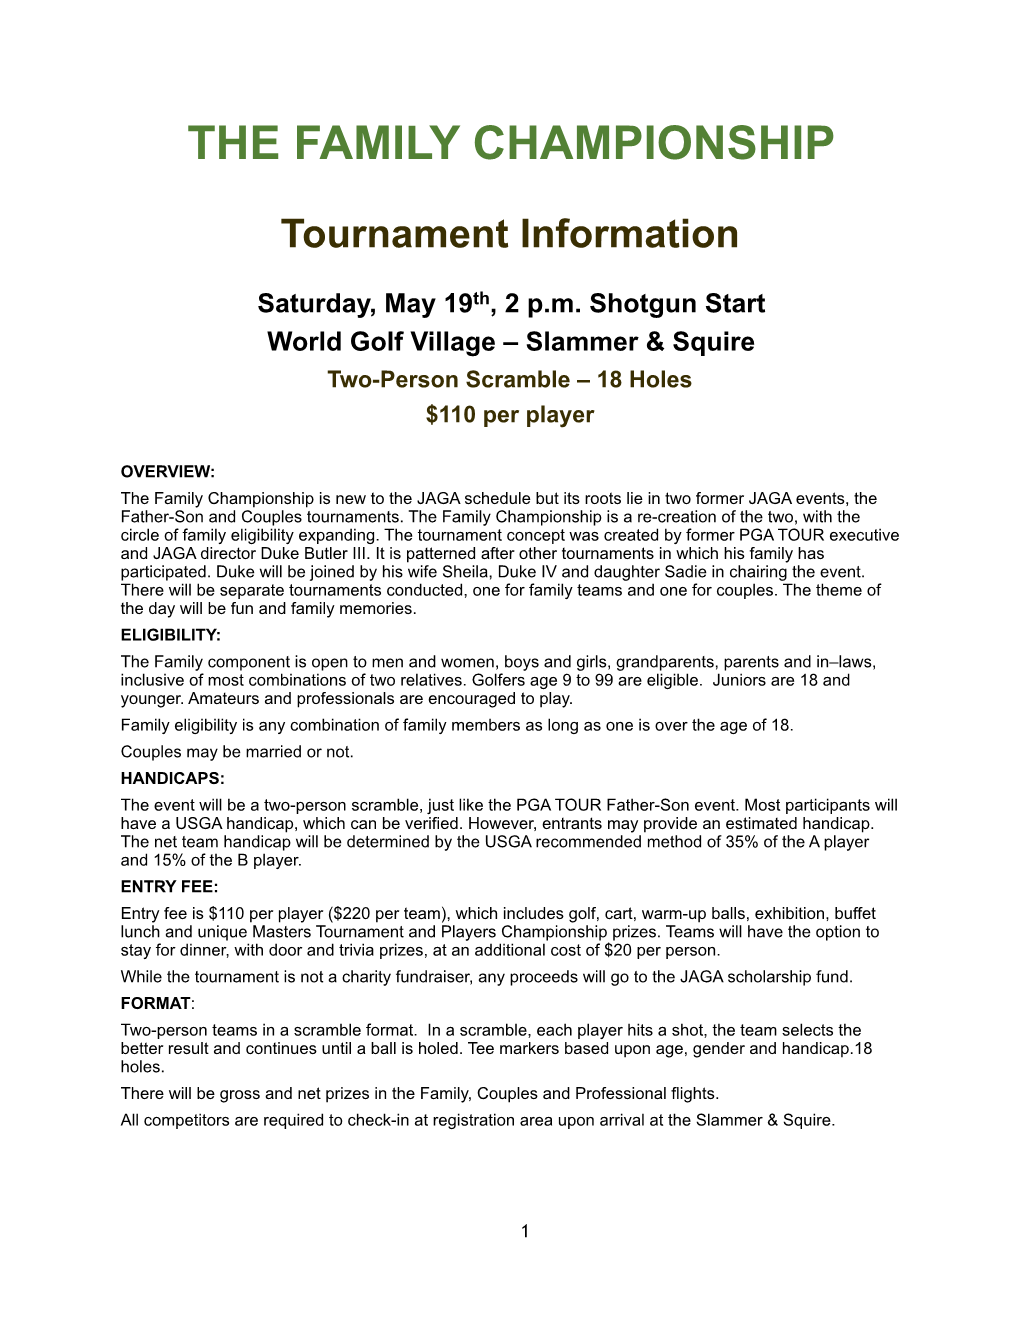 Tournament Information Document